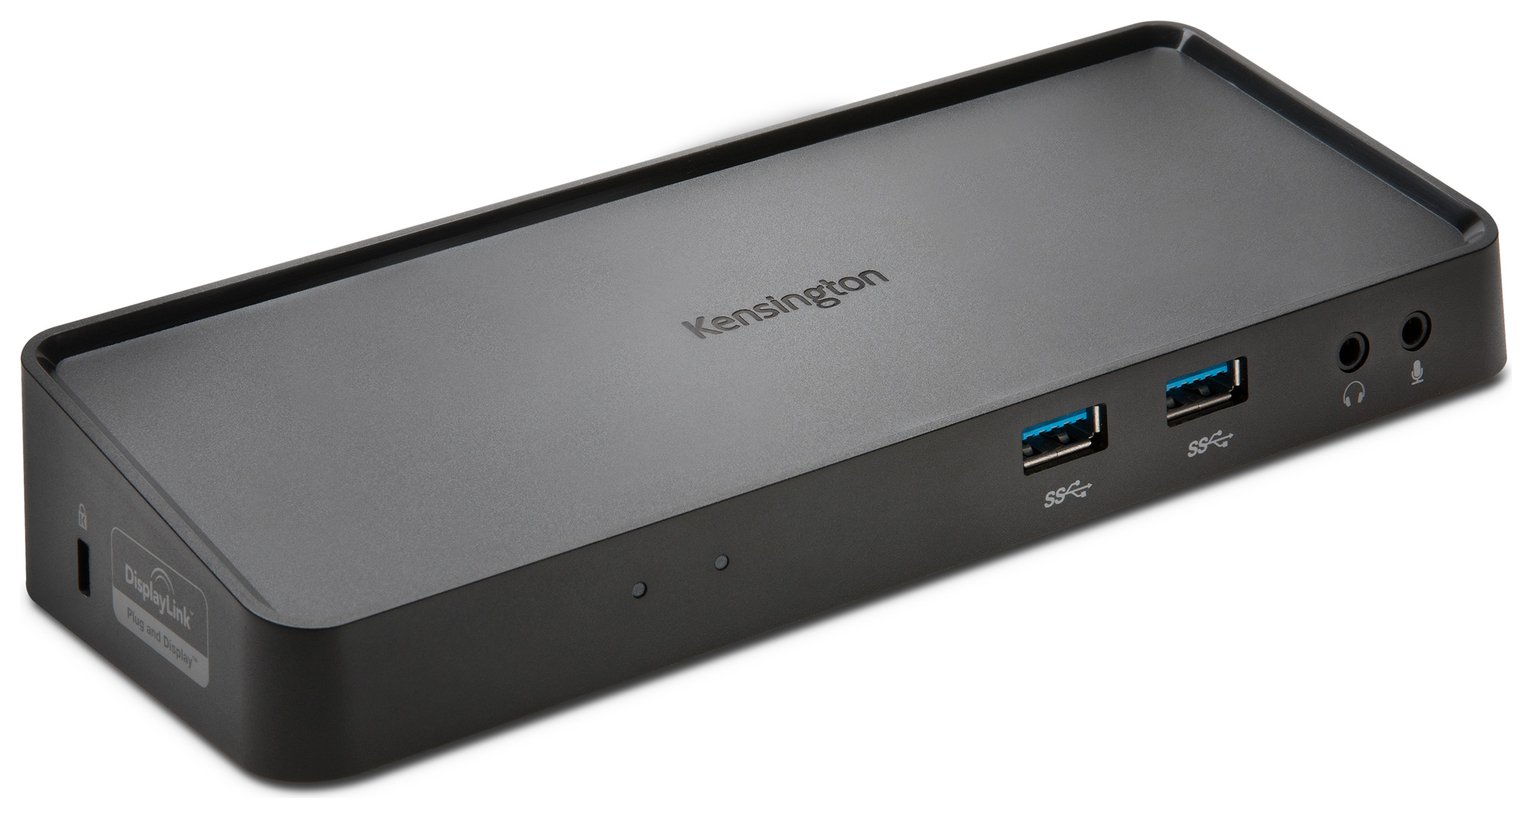 Kensington SD3600 12 Port USB Hub